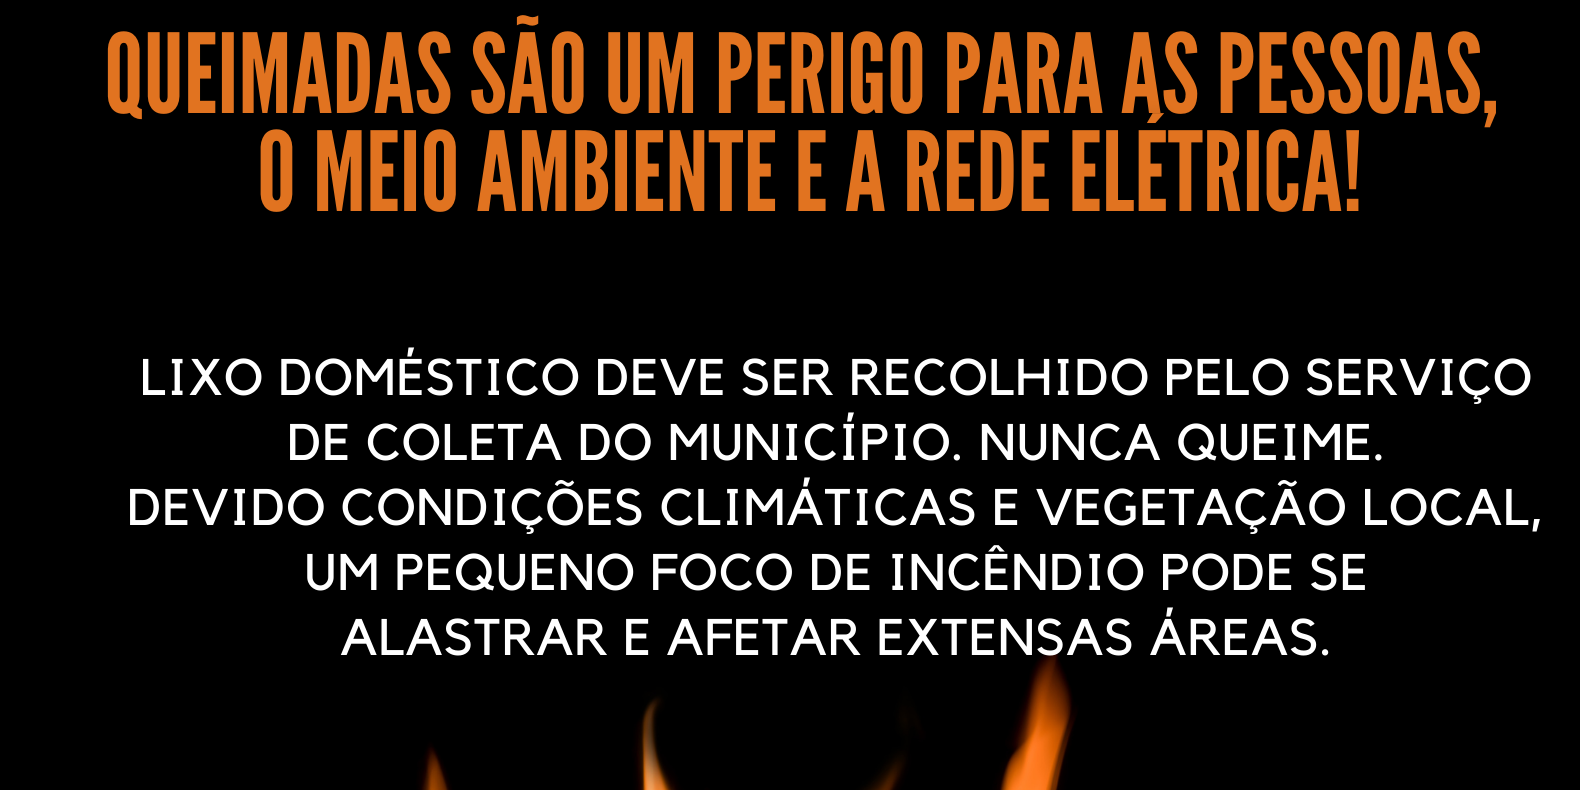 Prefeitura orienta sobre os cuidados para evitar queimadas no município -  Prefeitura Municipal de Poá